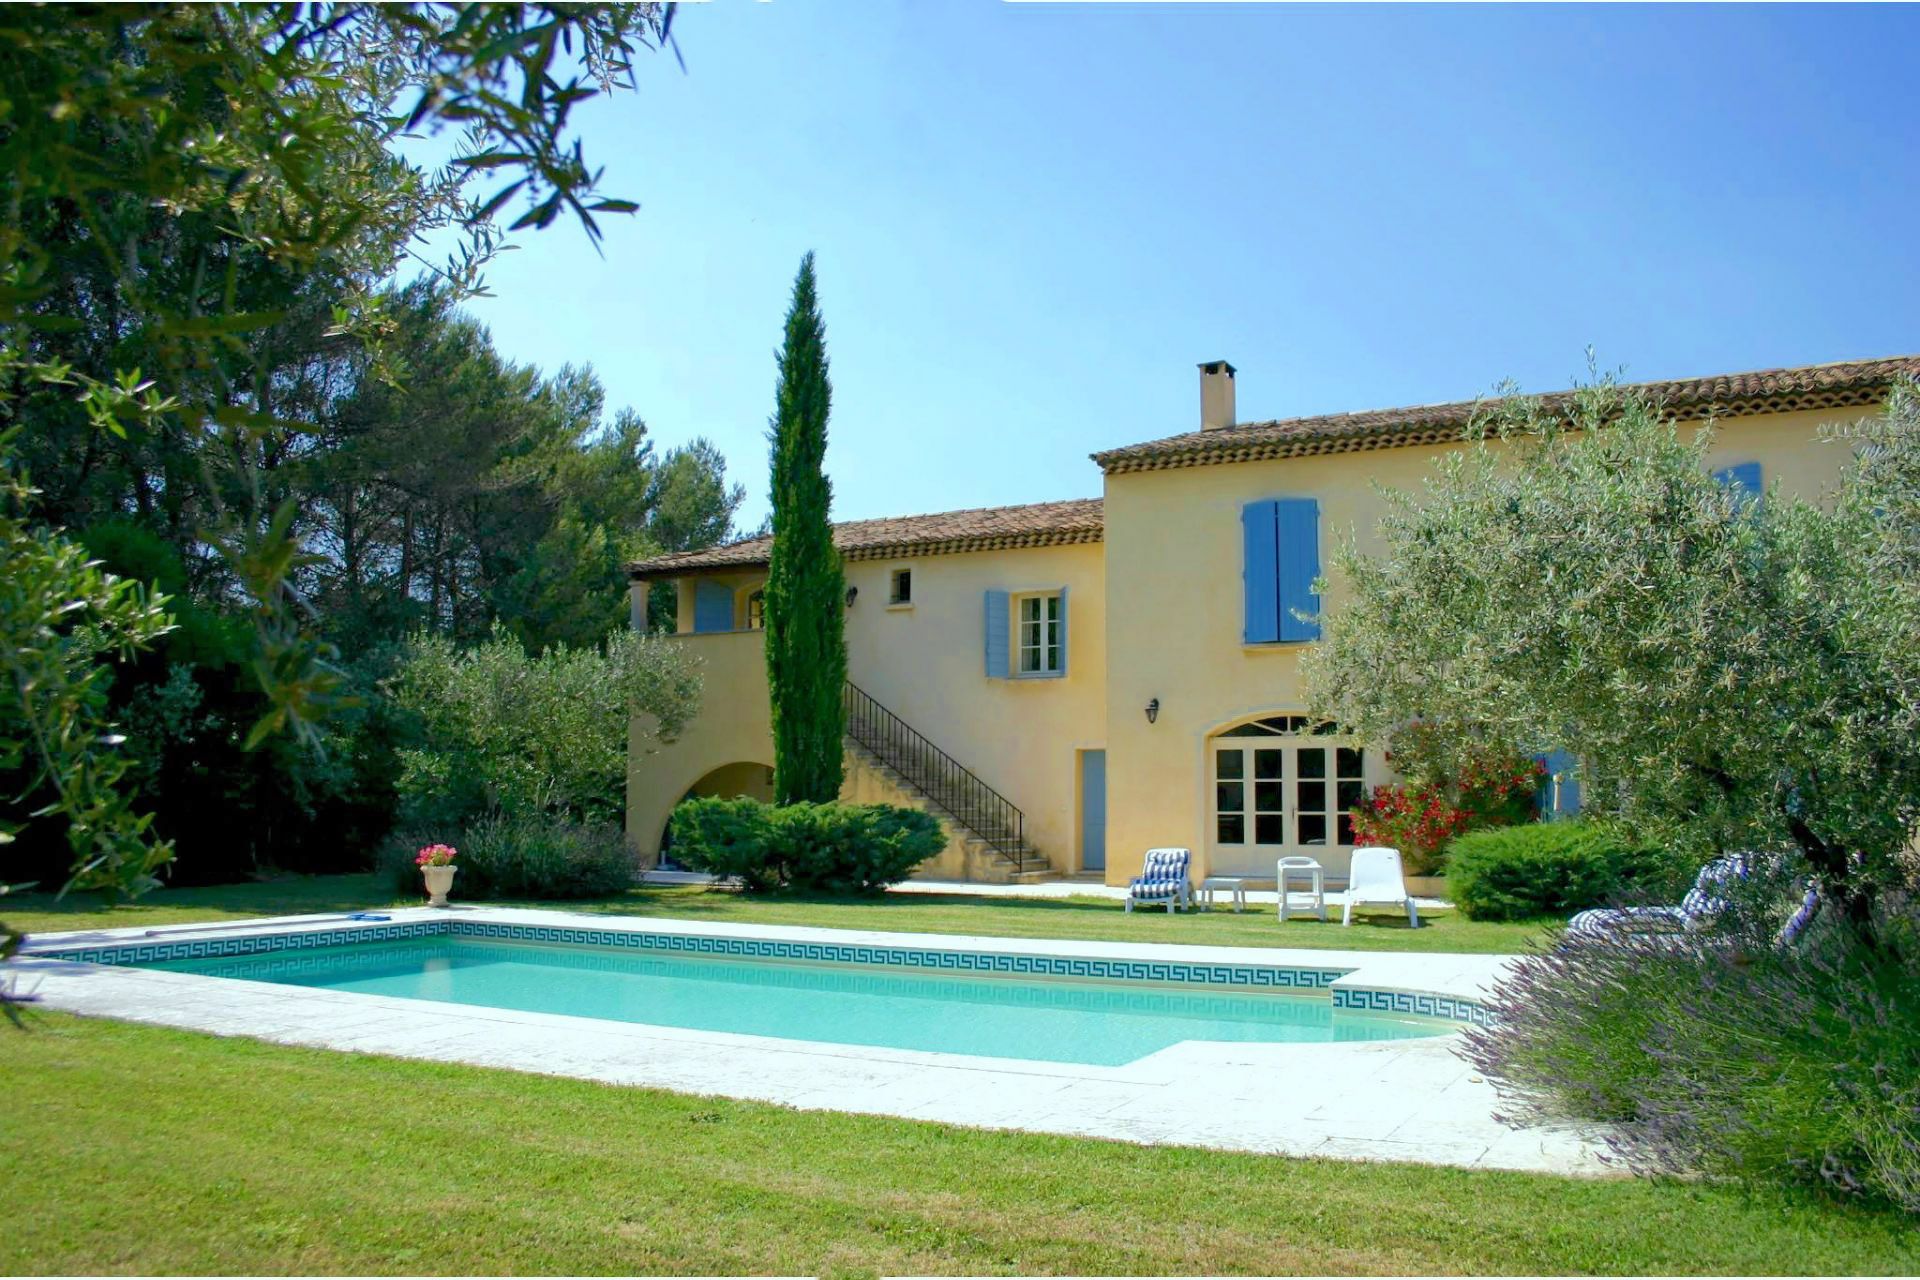 Méditerranée Location Mas with Private pool in St Rémy de Provence, Provence